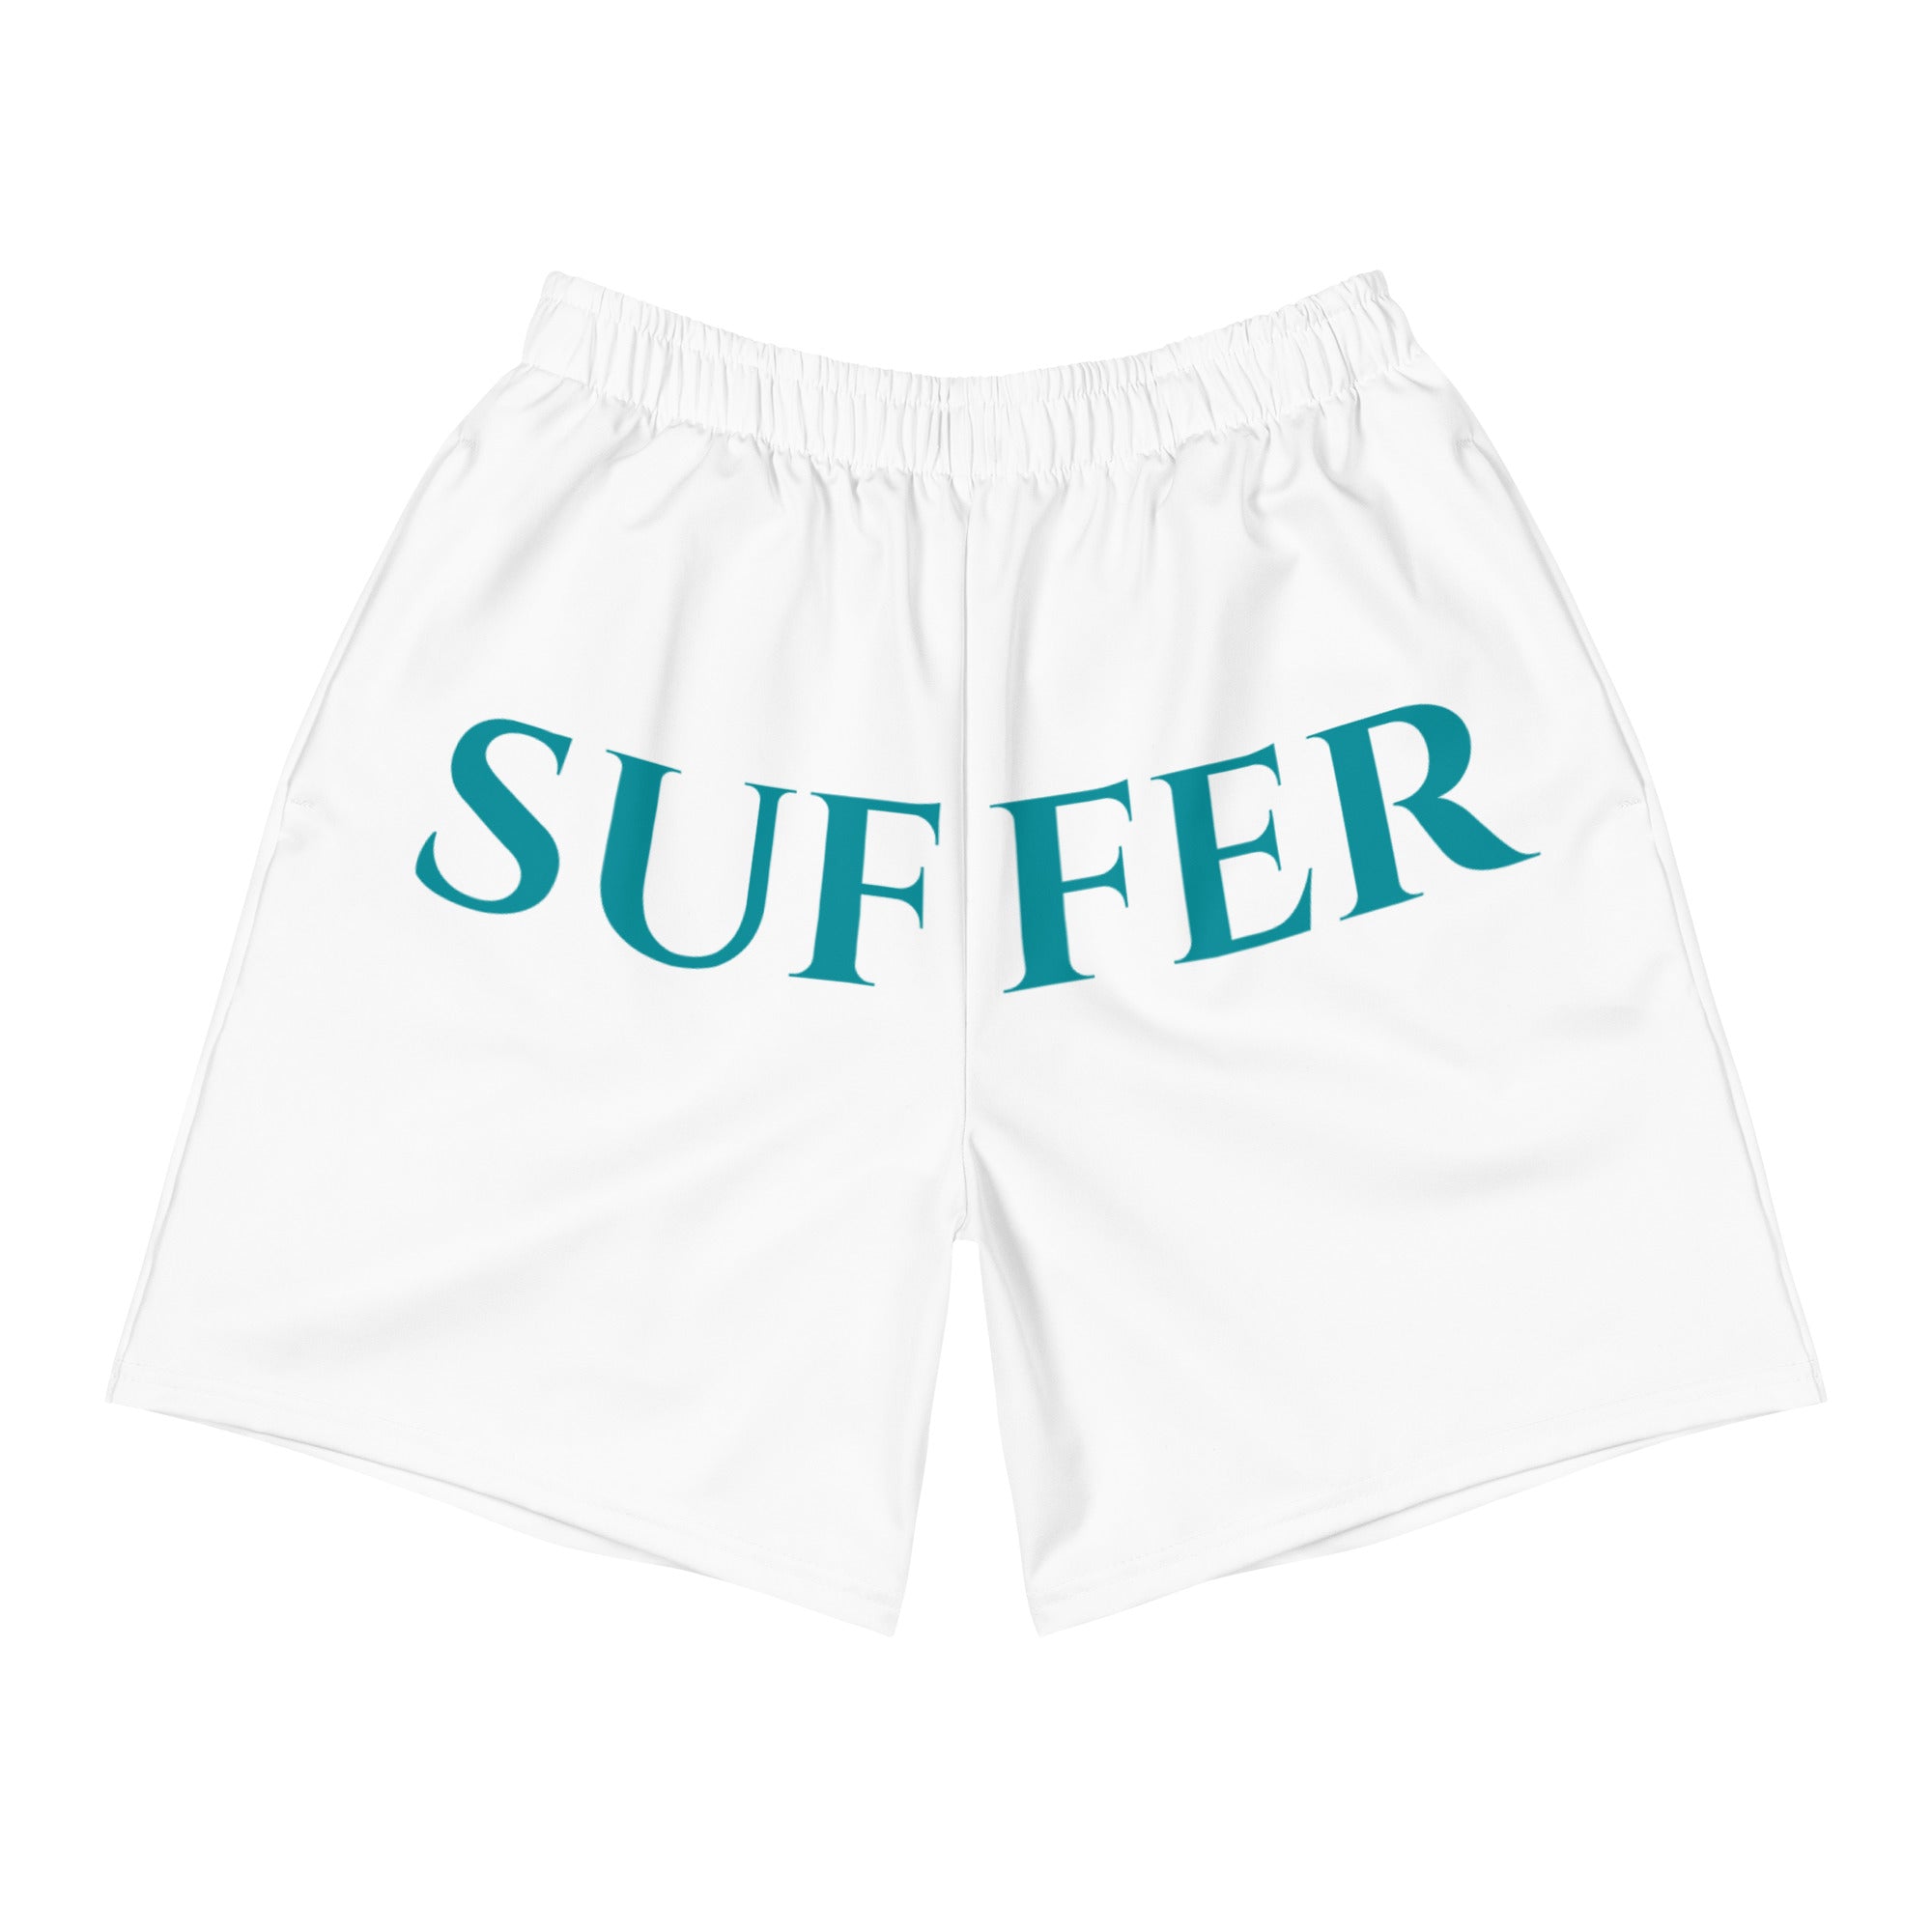 WhT/Teal Hip Suffer Athletic Shorts – ShutUpAndSuffer